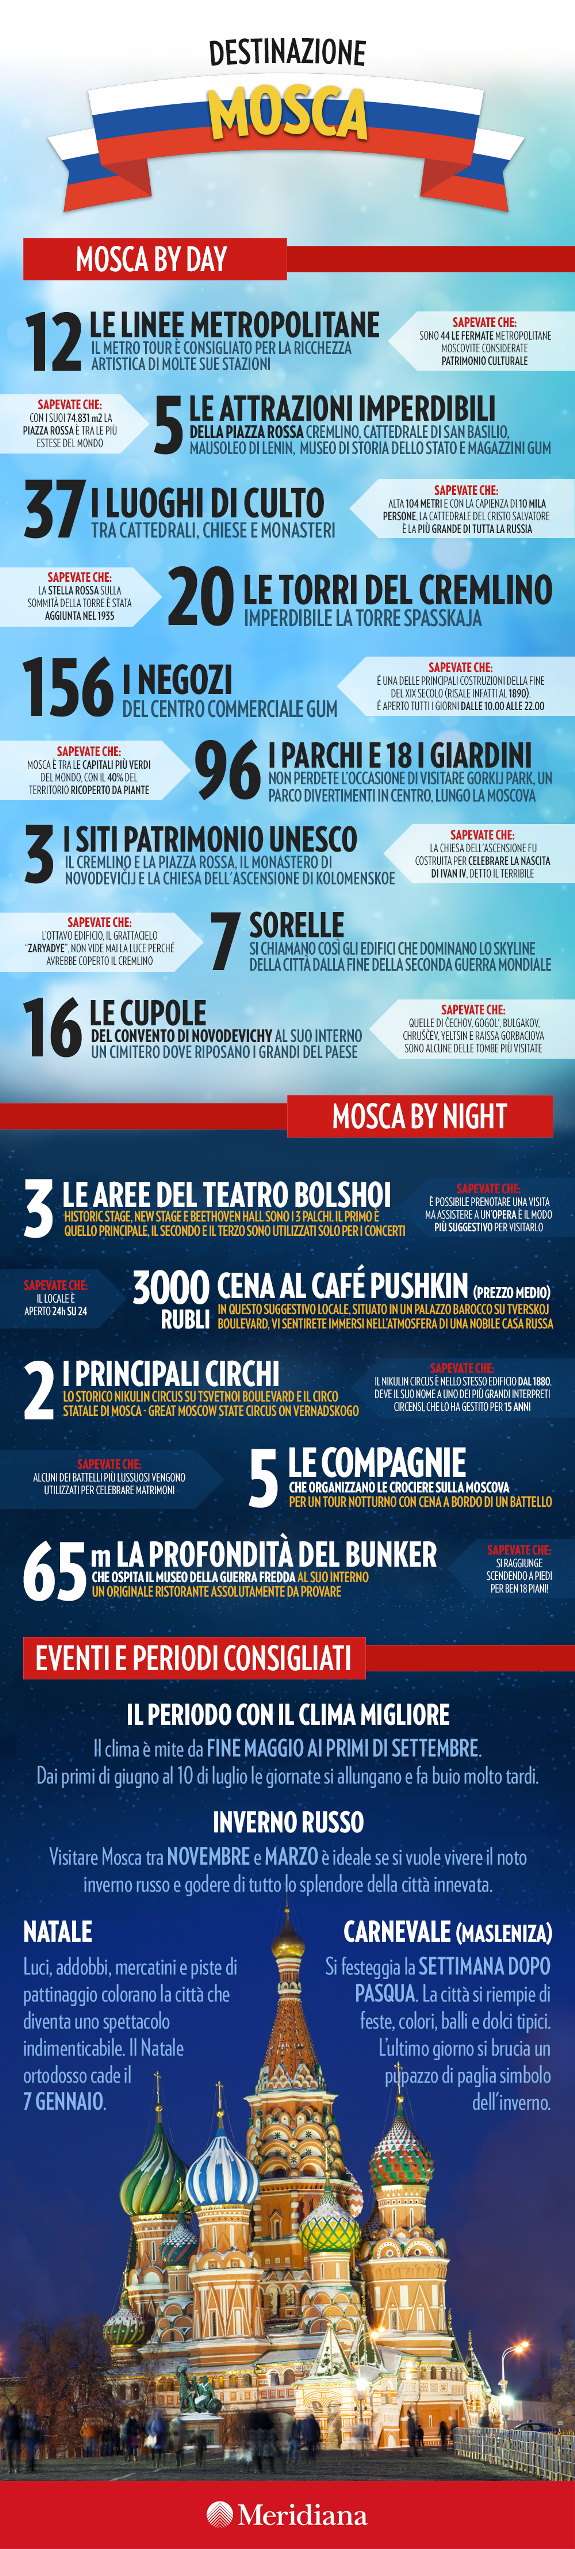 infografica meridiana - weekend Mosca